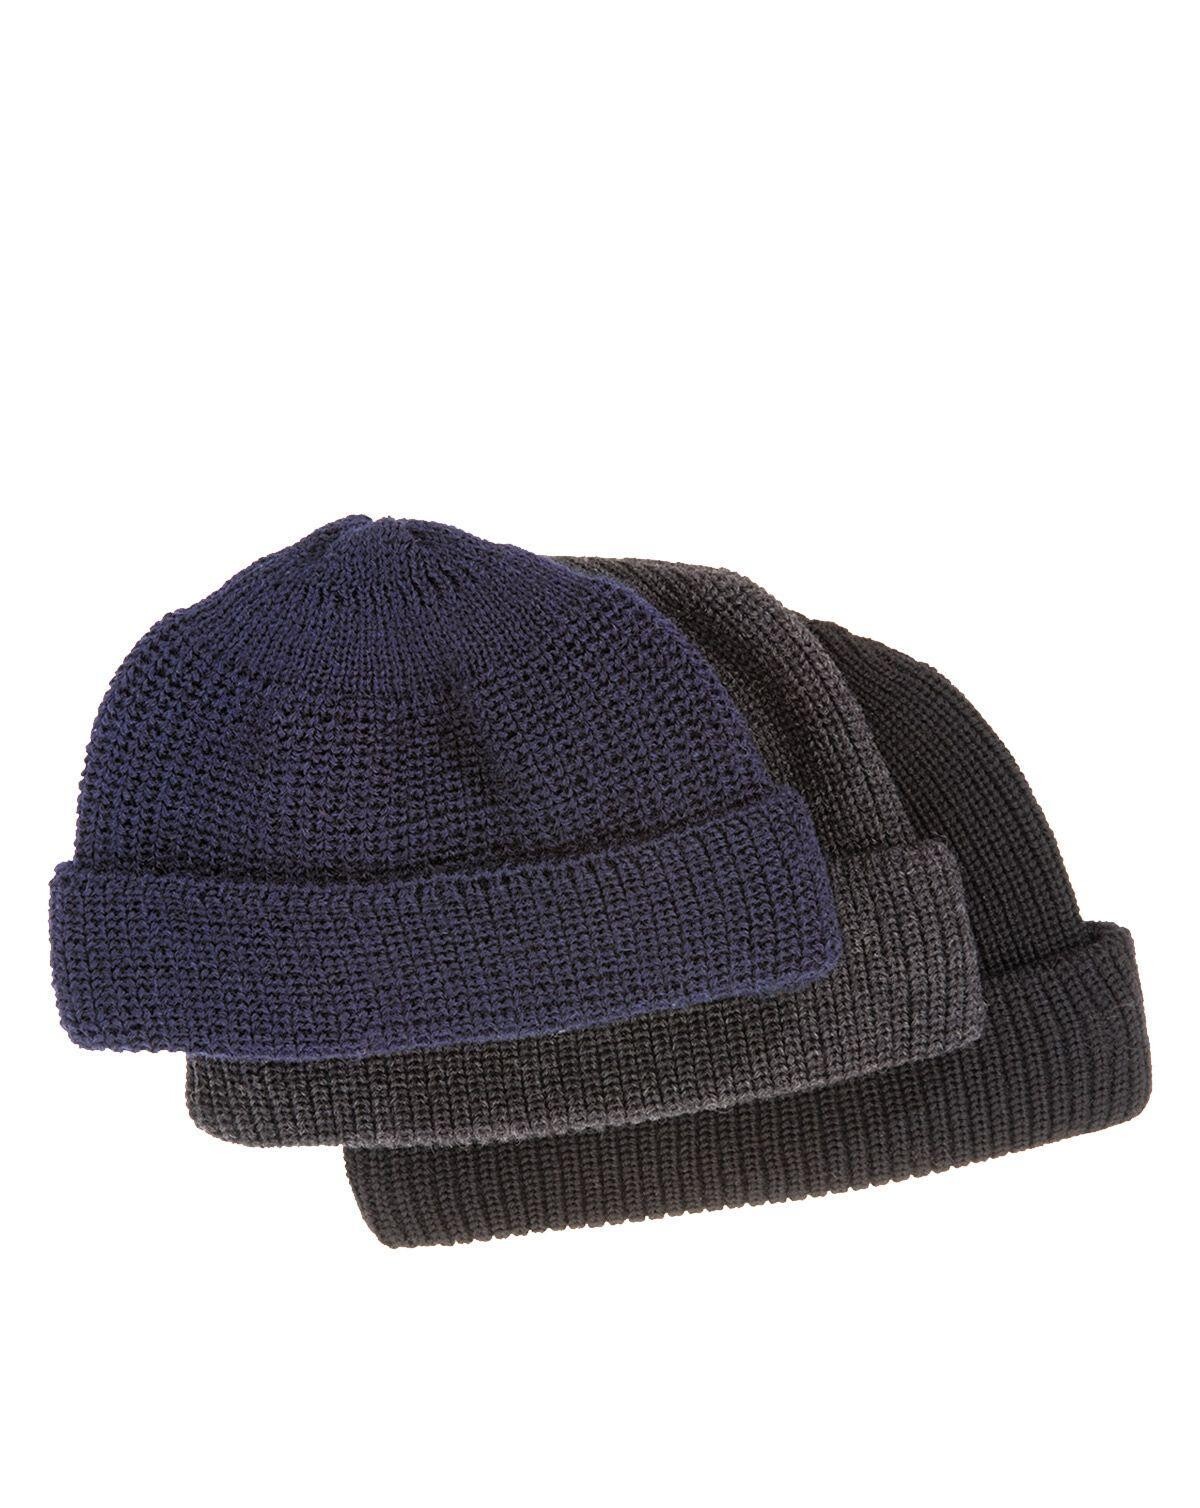 #2 - FHB Uld hat - Johann (Navy, One Size)